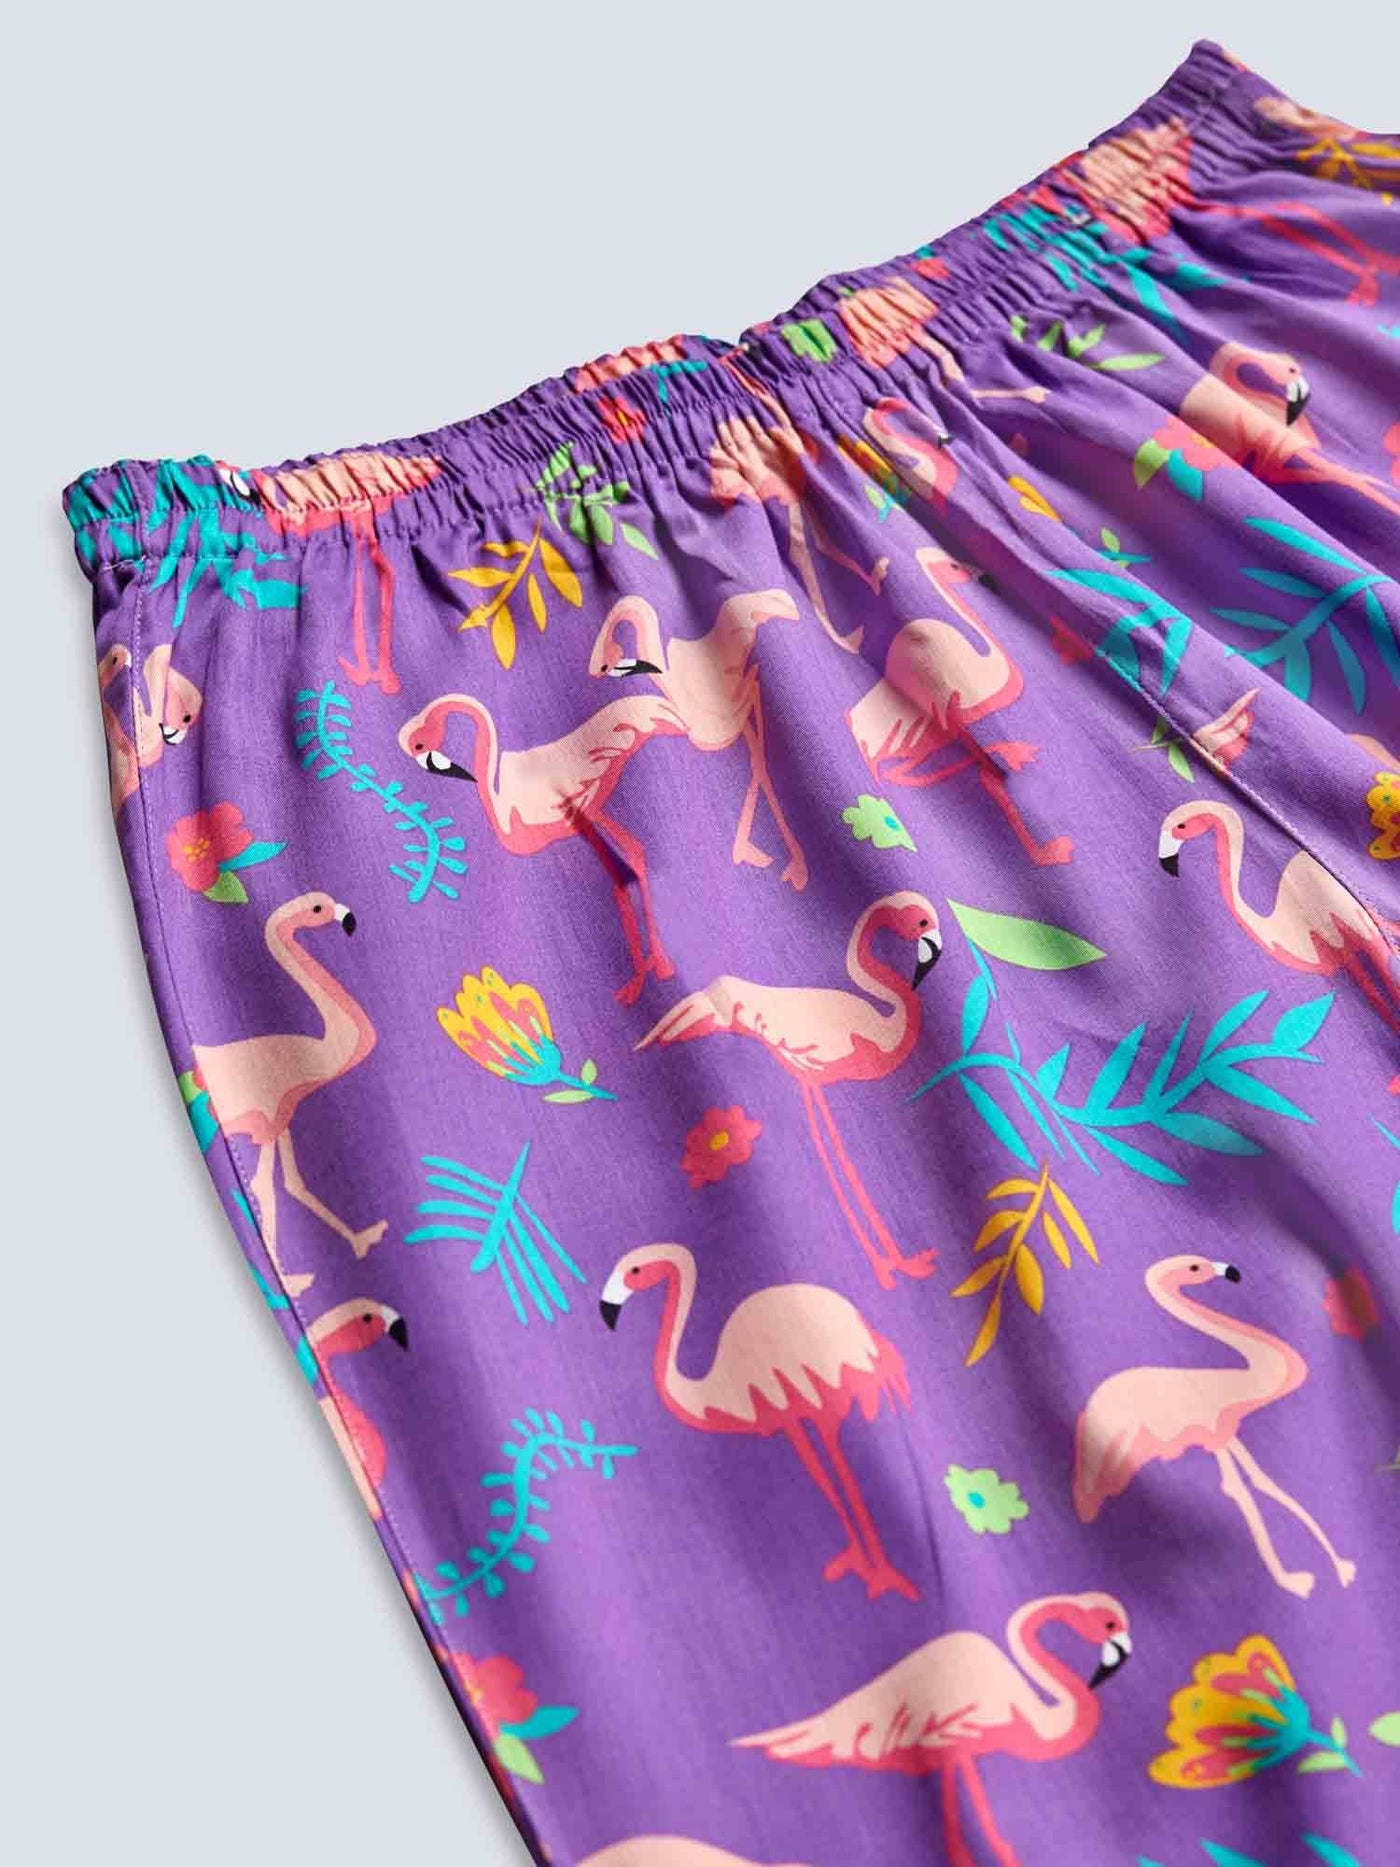 Flamingo (Purple) Women's T-Shirt PJ Set